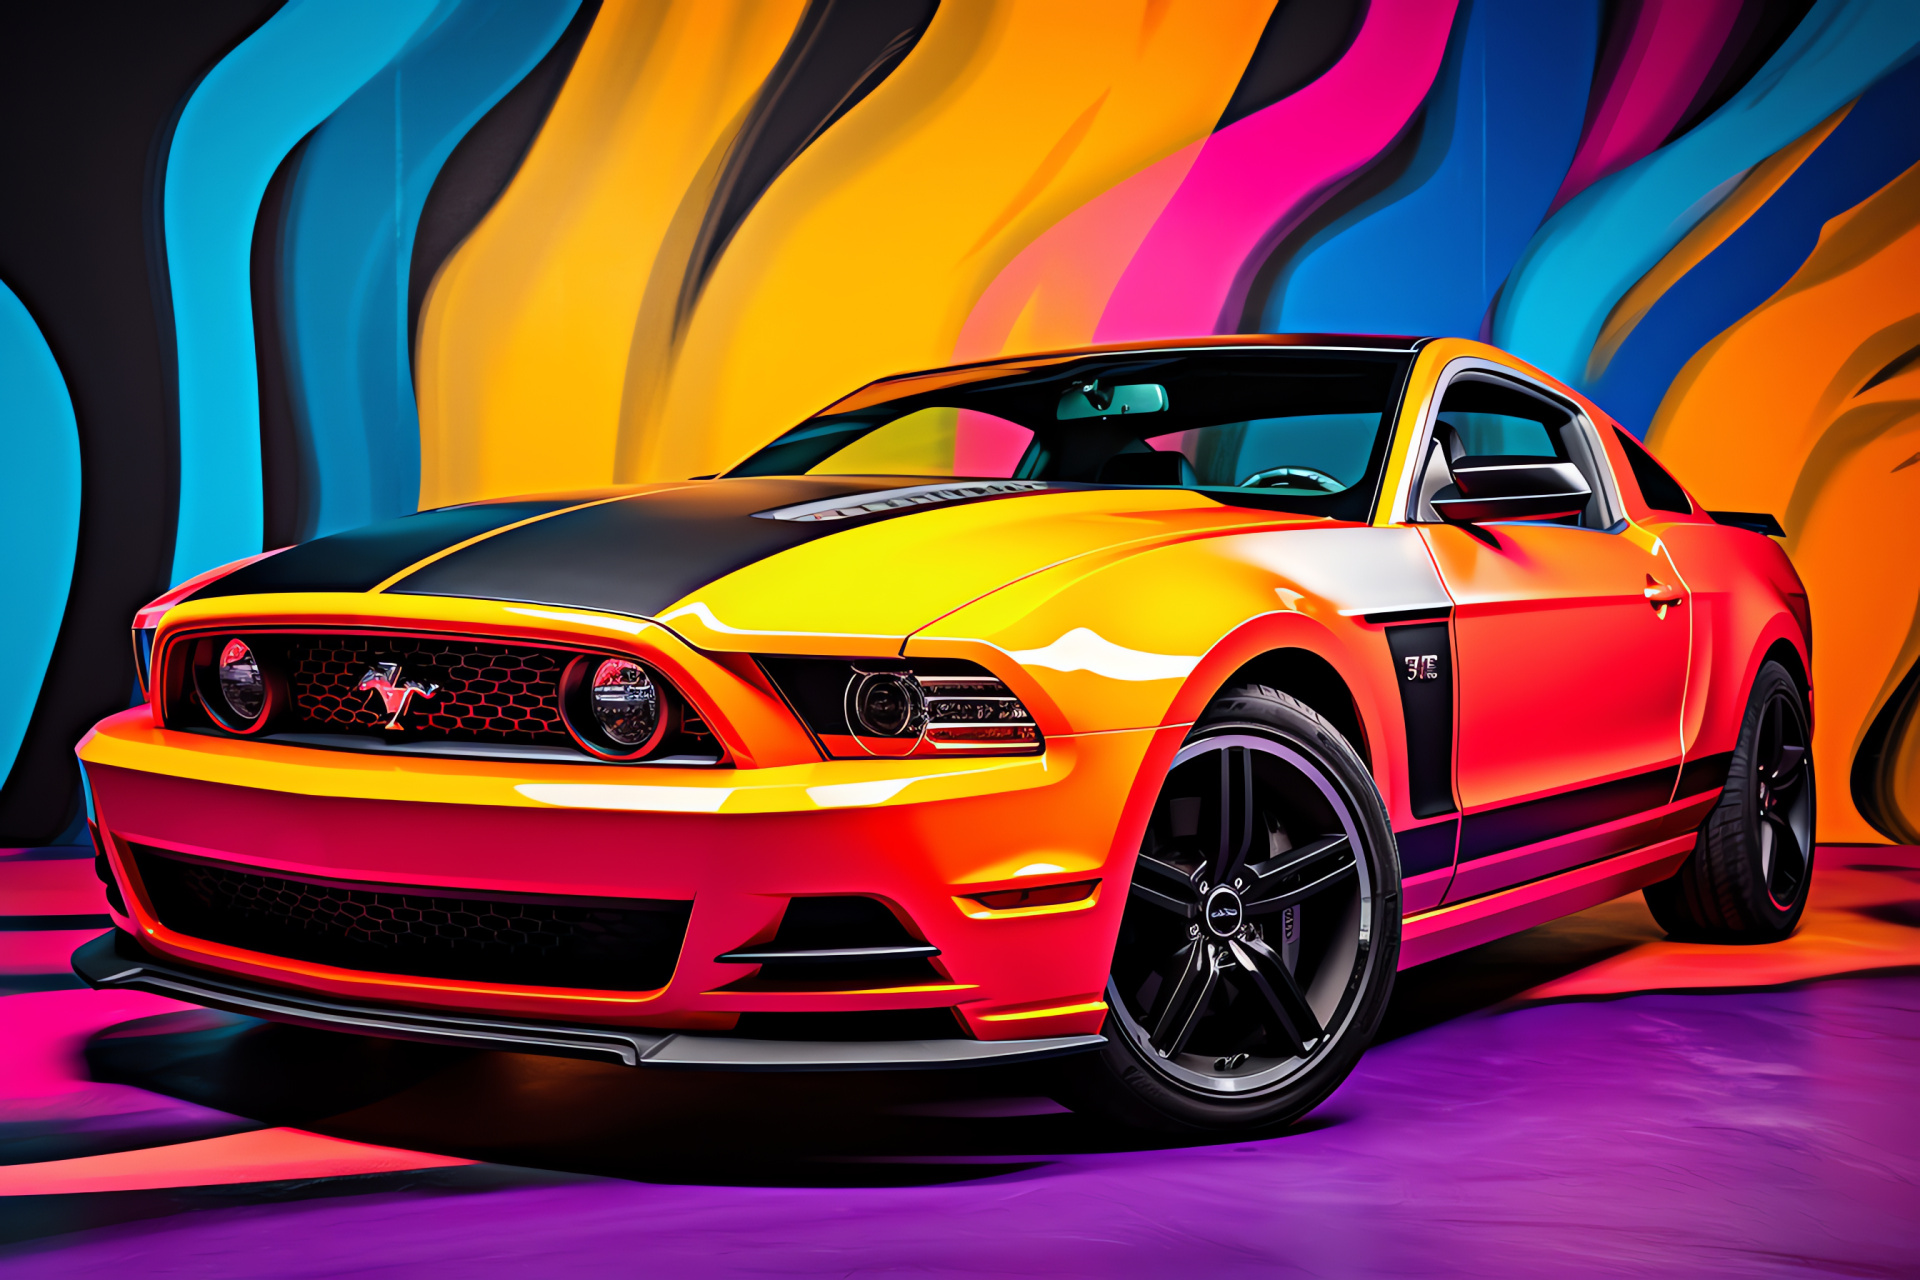 Bold Mustang stance, Colorful setting exuberance, Automotive display, Broad horizon, Dominant car personality, HD Desktop Wallpaper